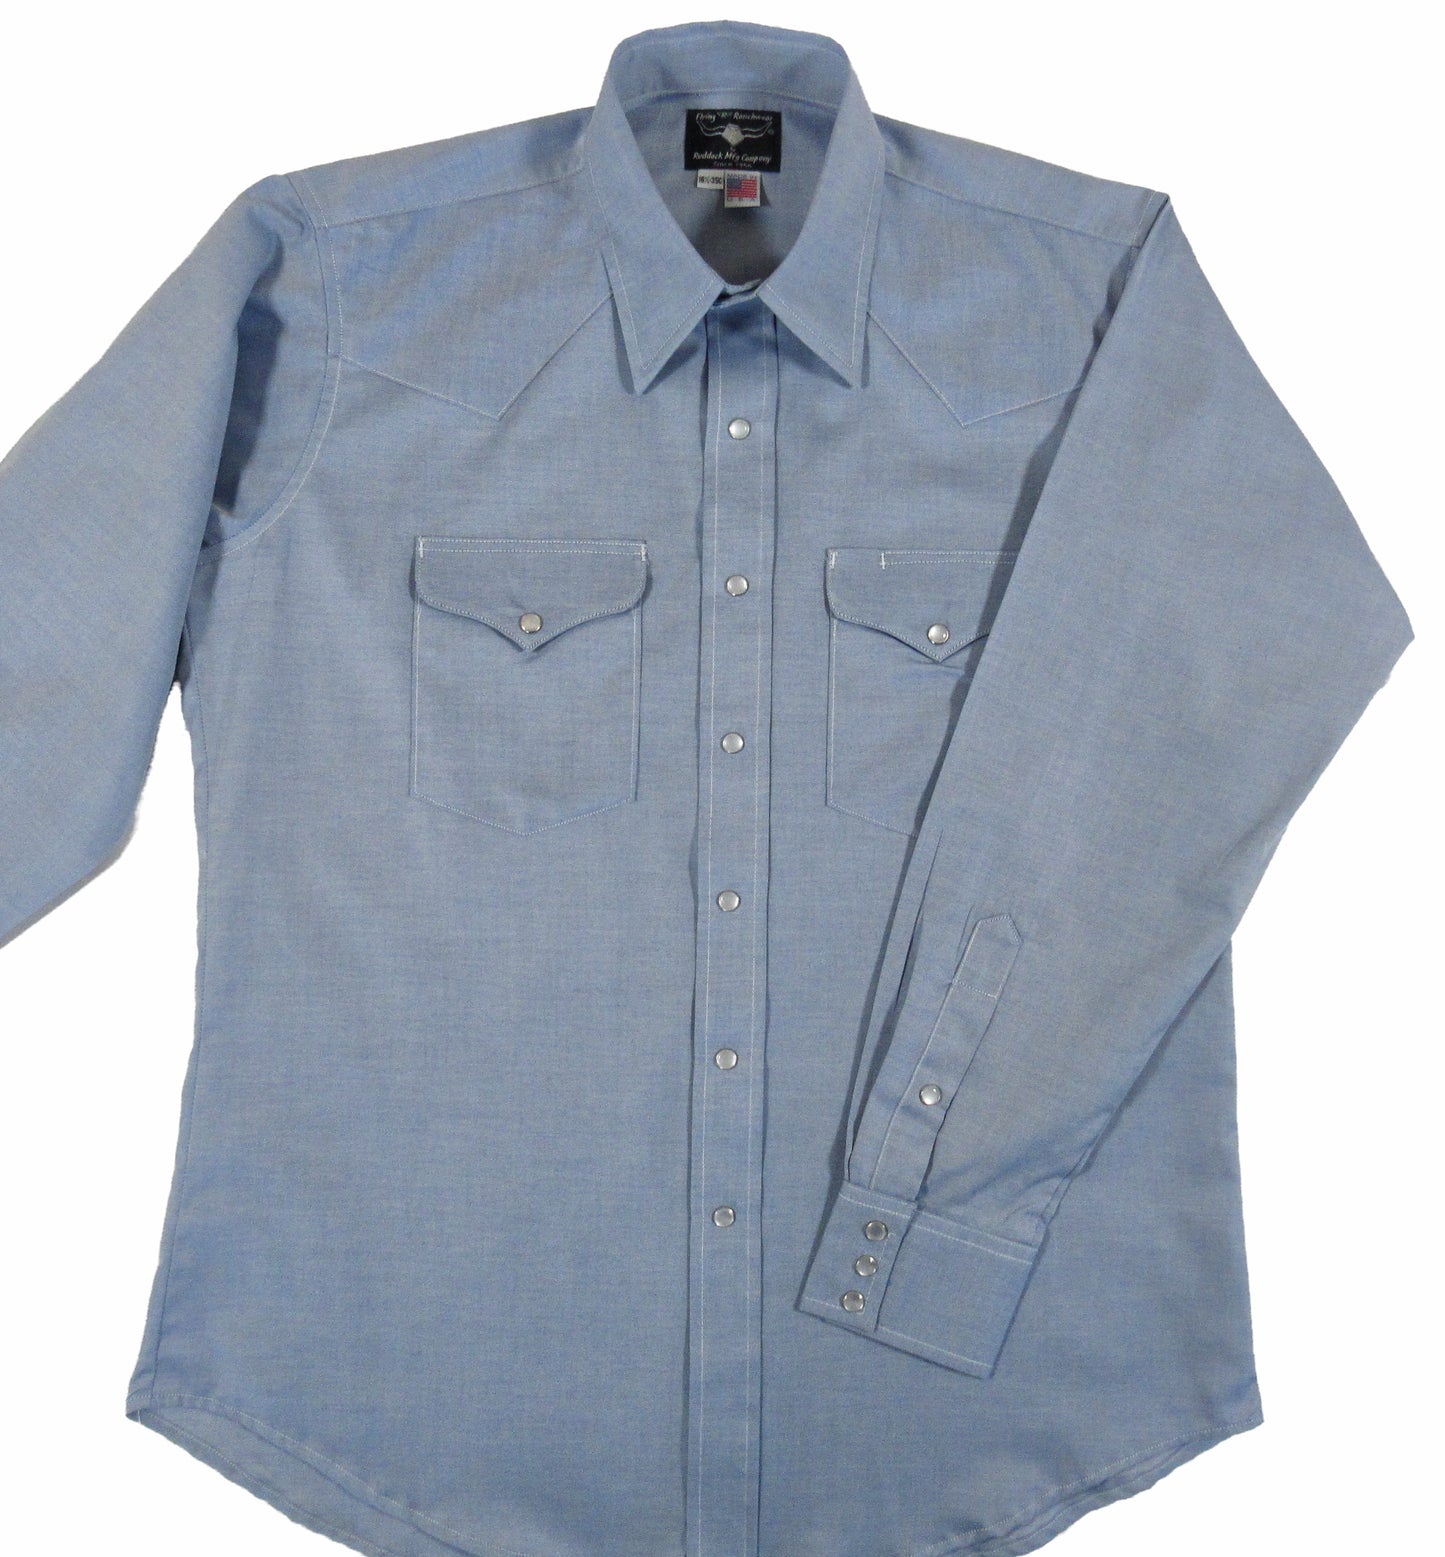 Flying R Ranchwear - Blazer Solids - Dress Shirt Blue - Long Sleeve